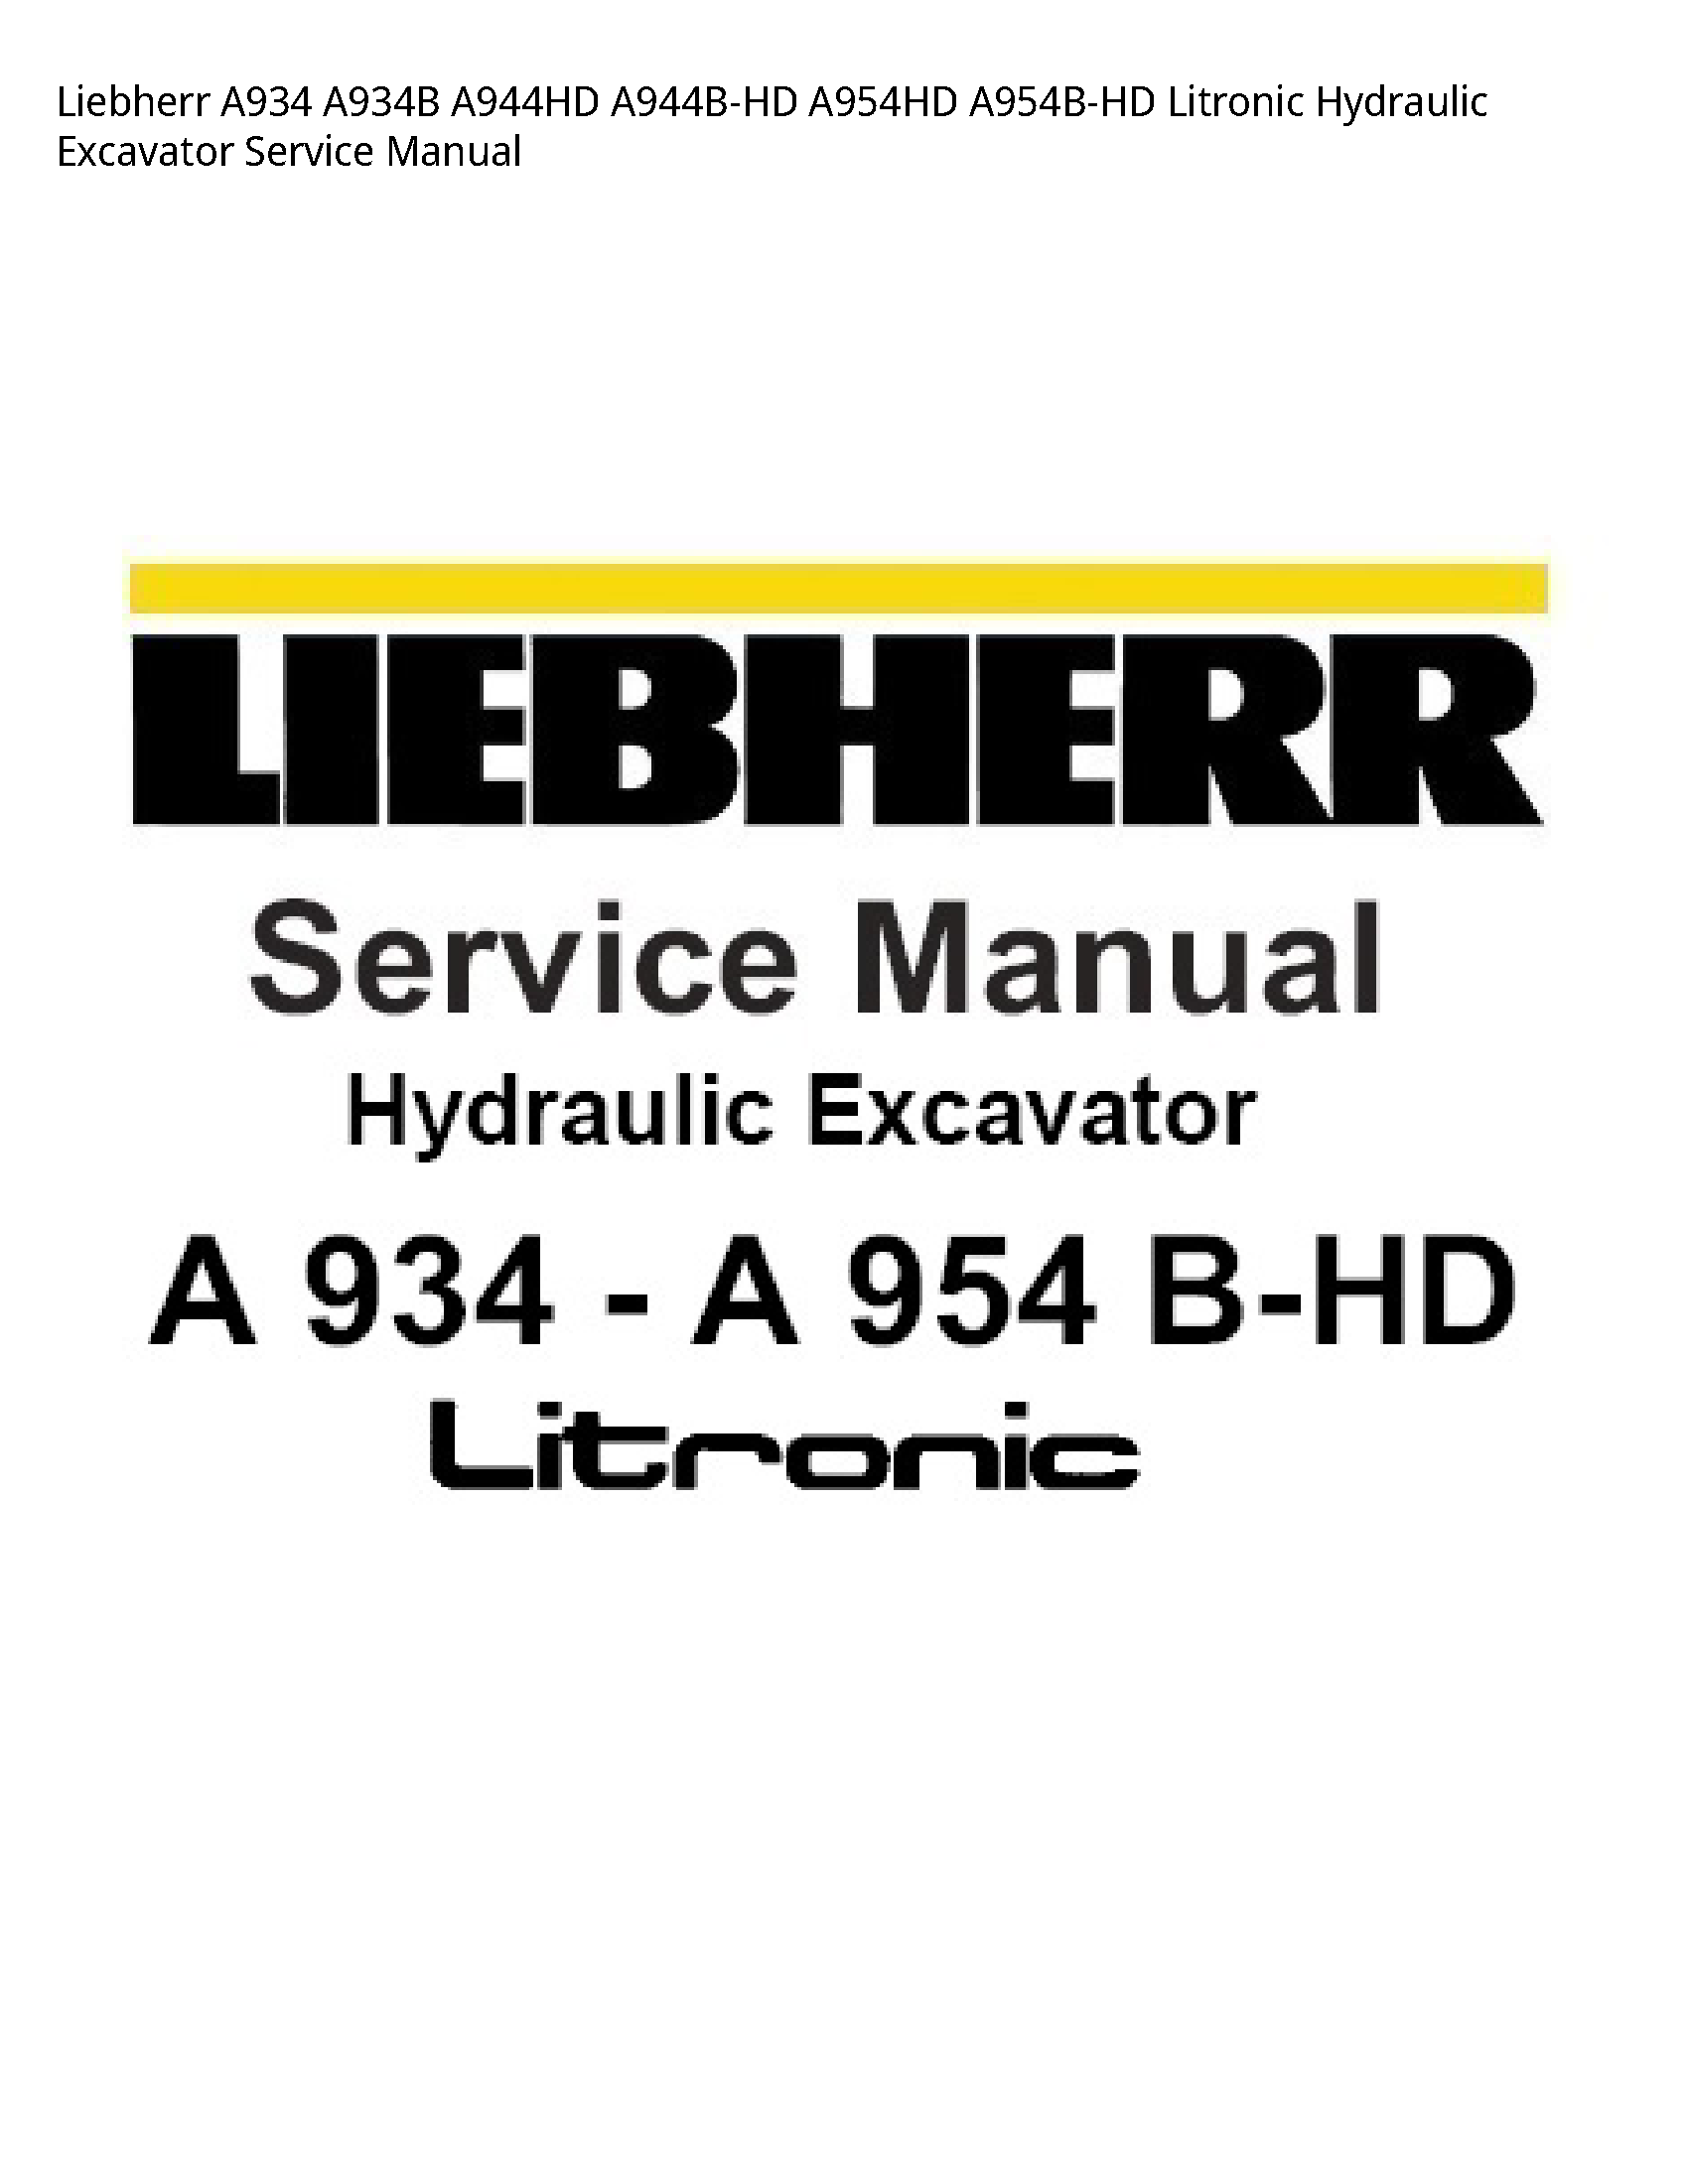 Liebherr A934 Litronic Hydraulic Excavator manual